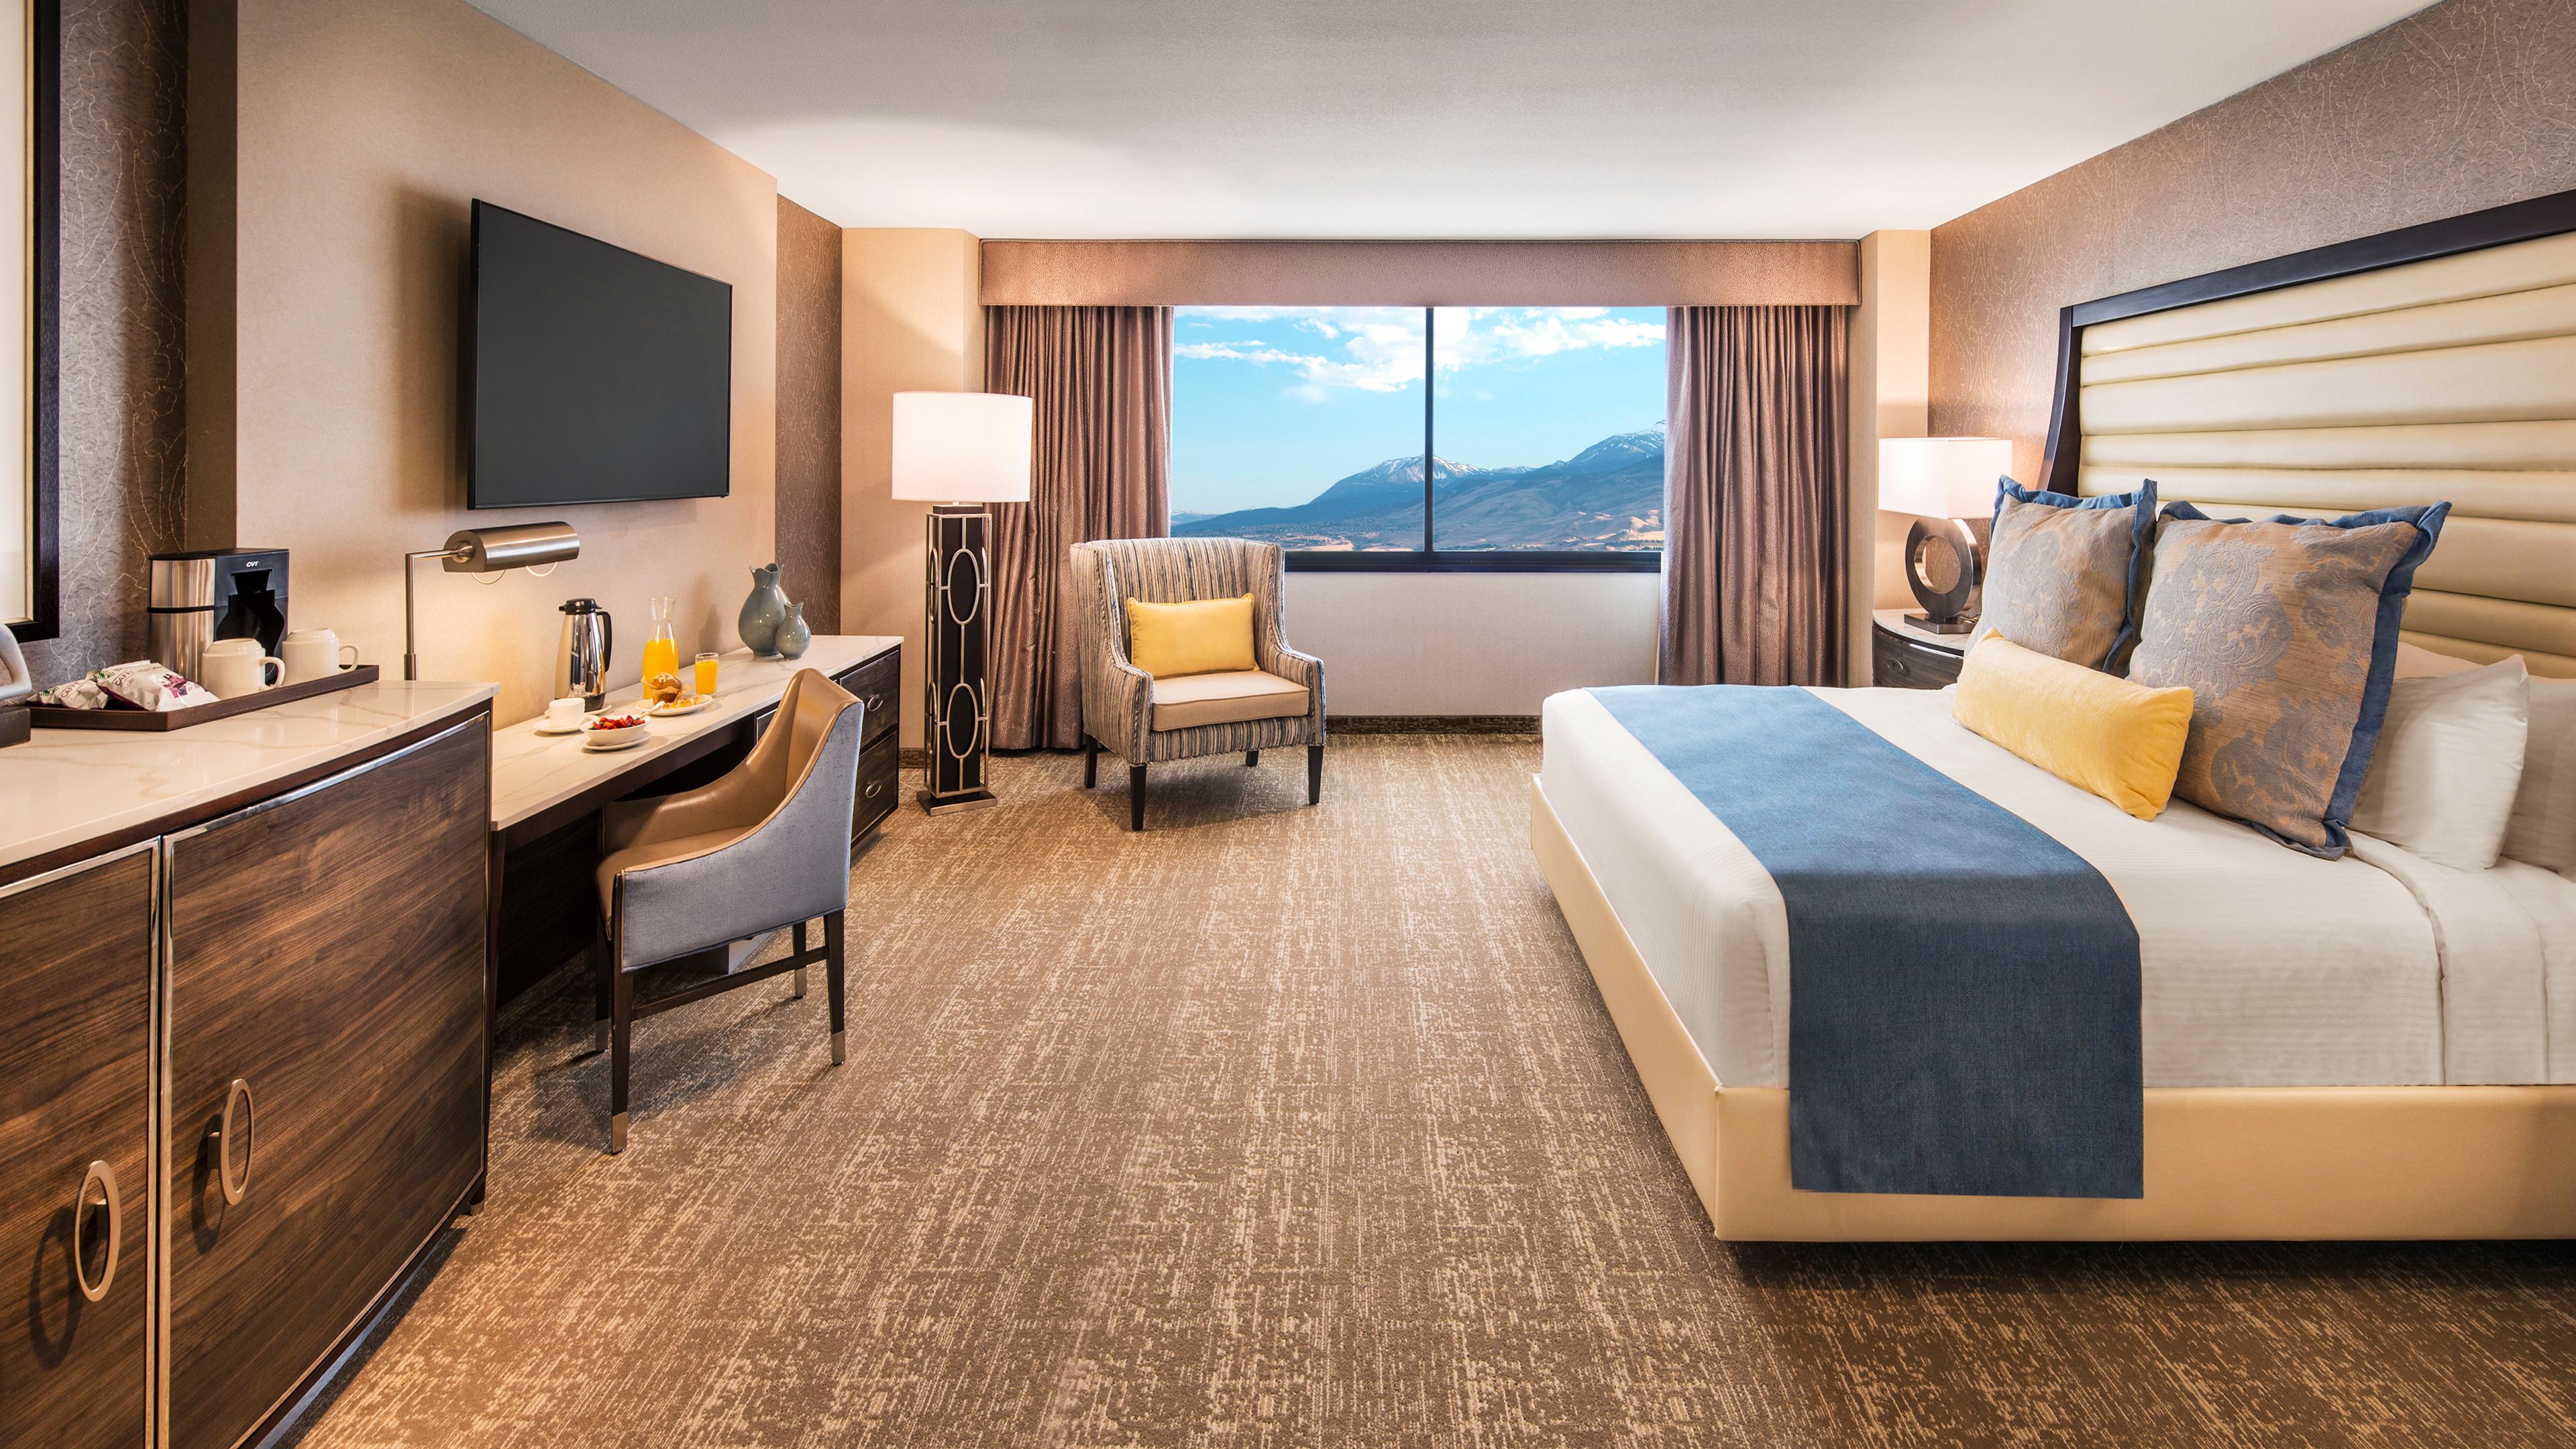 Bedroom view of Grand Sierra Resort and Casino